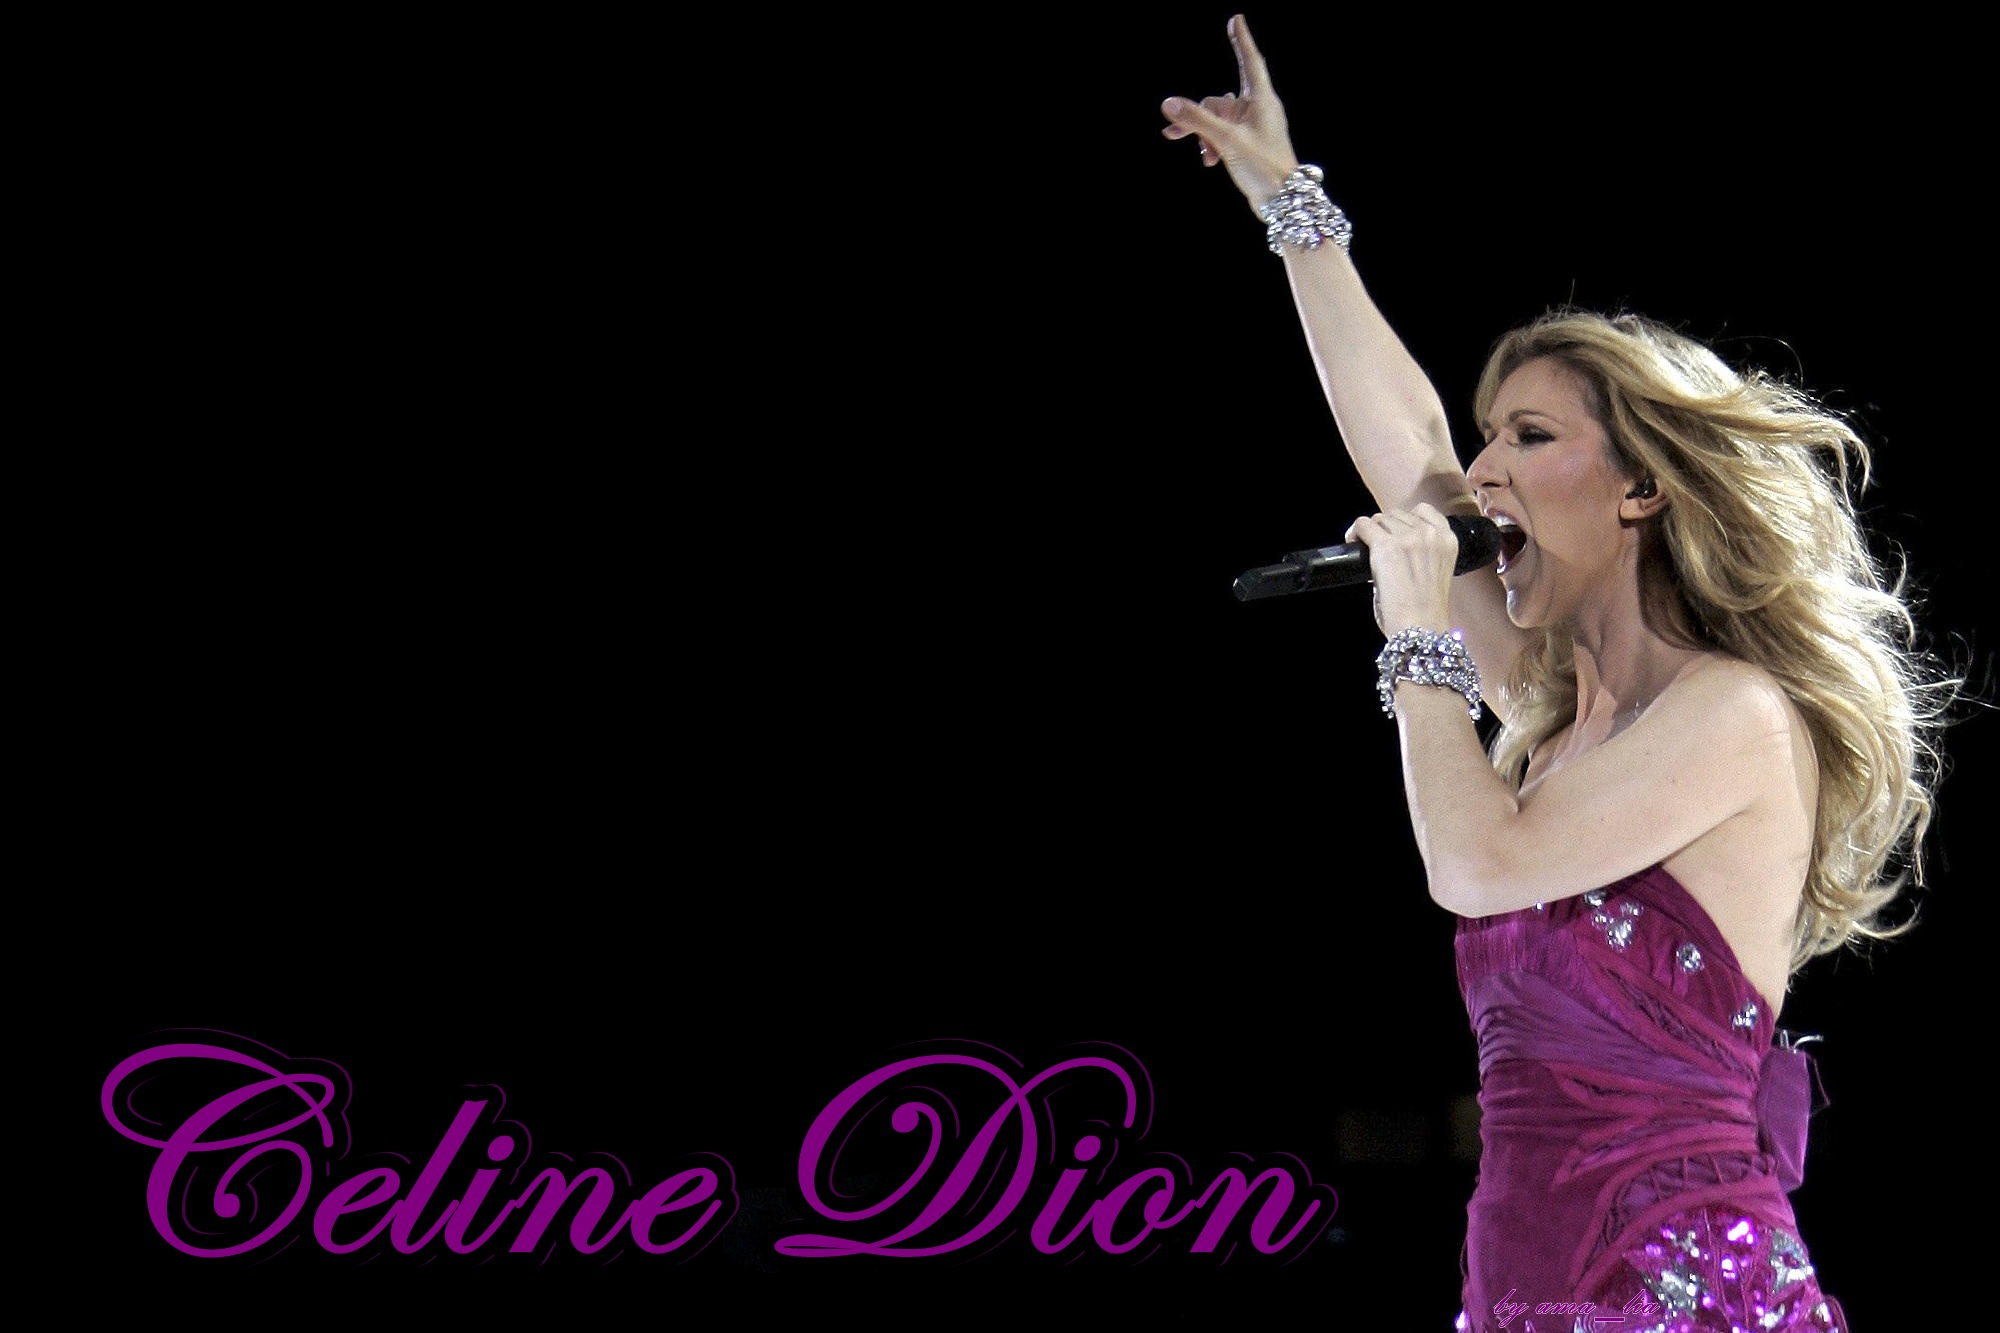 celine dion wallpaper,performance,entertainment,music artist,singing,singer